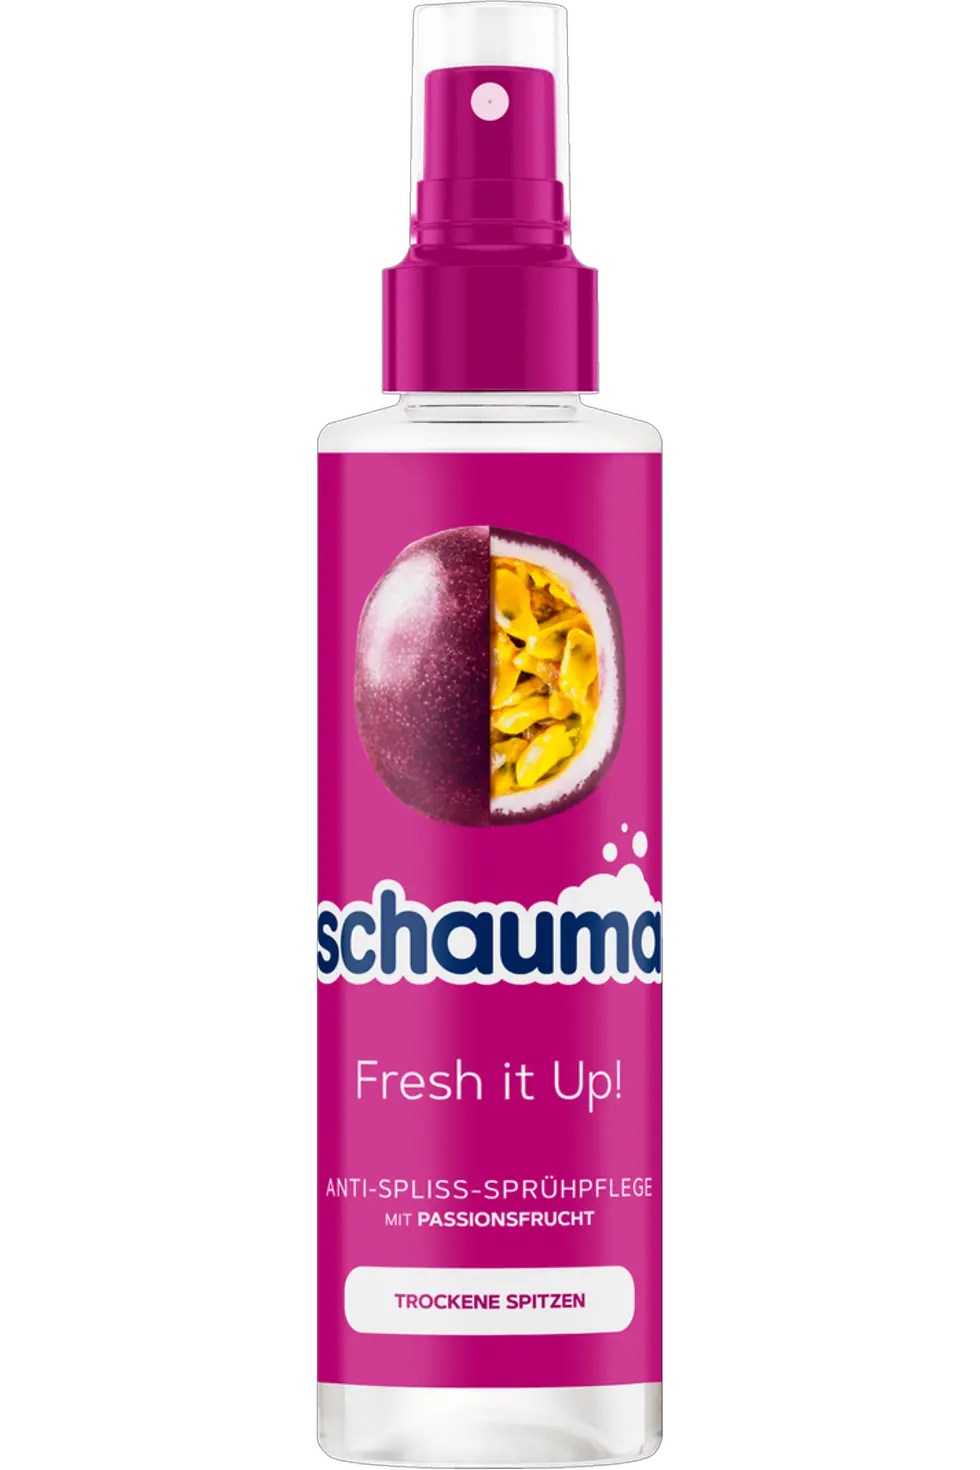 
Schauma Sprühpflege Fresh it Up!